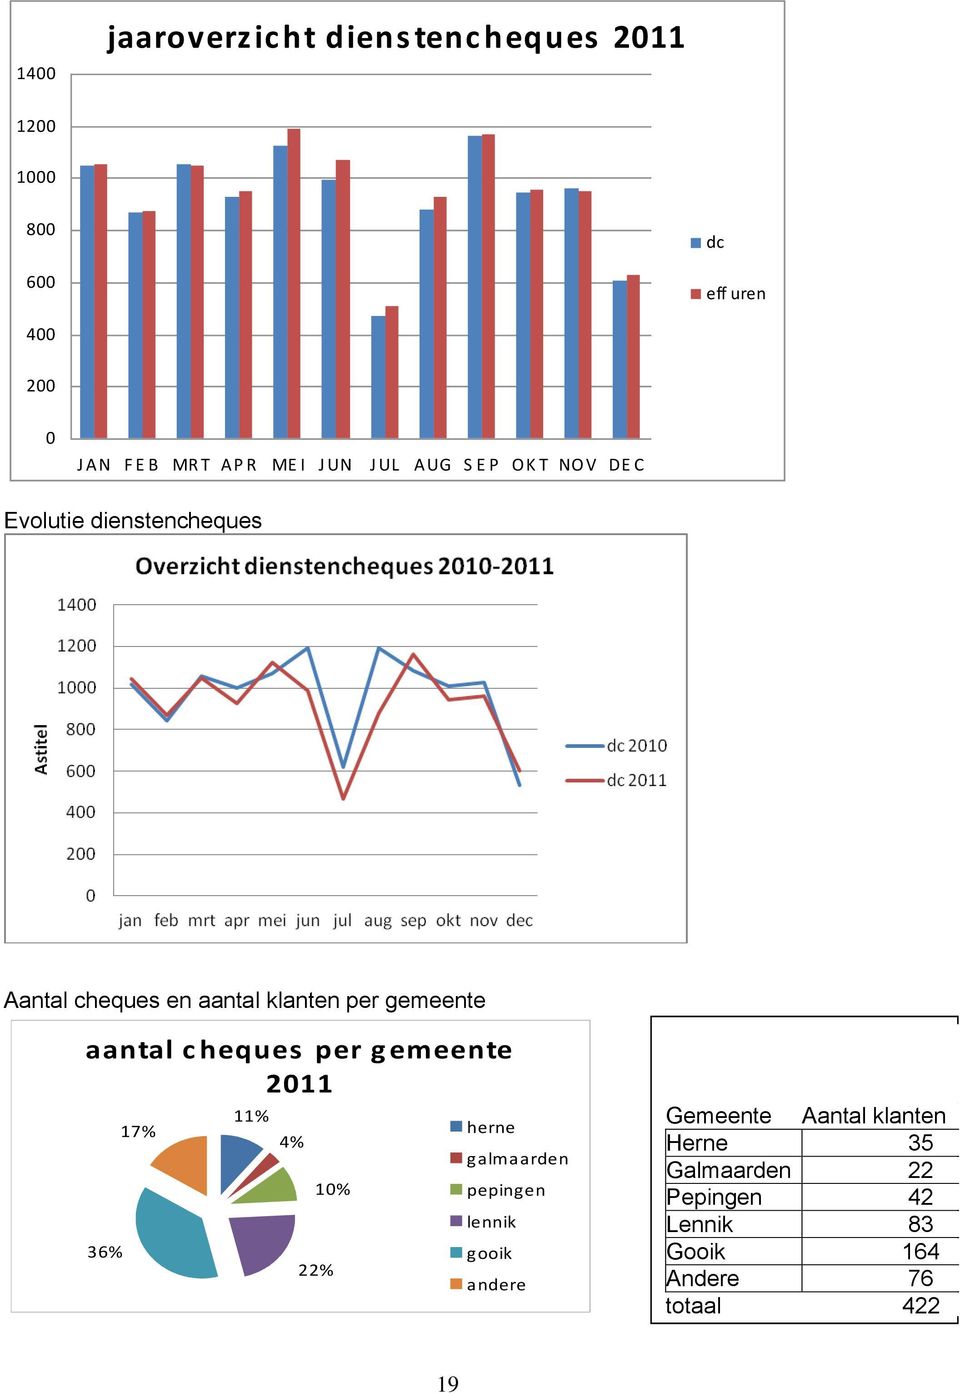 gemeente aantal c heques per g emeente 2011 36% 17% 11% 4% 10% 22% herne galmaarden pepingen lennik gooik